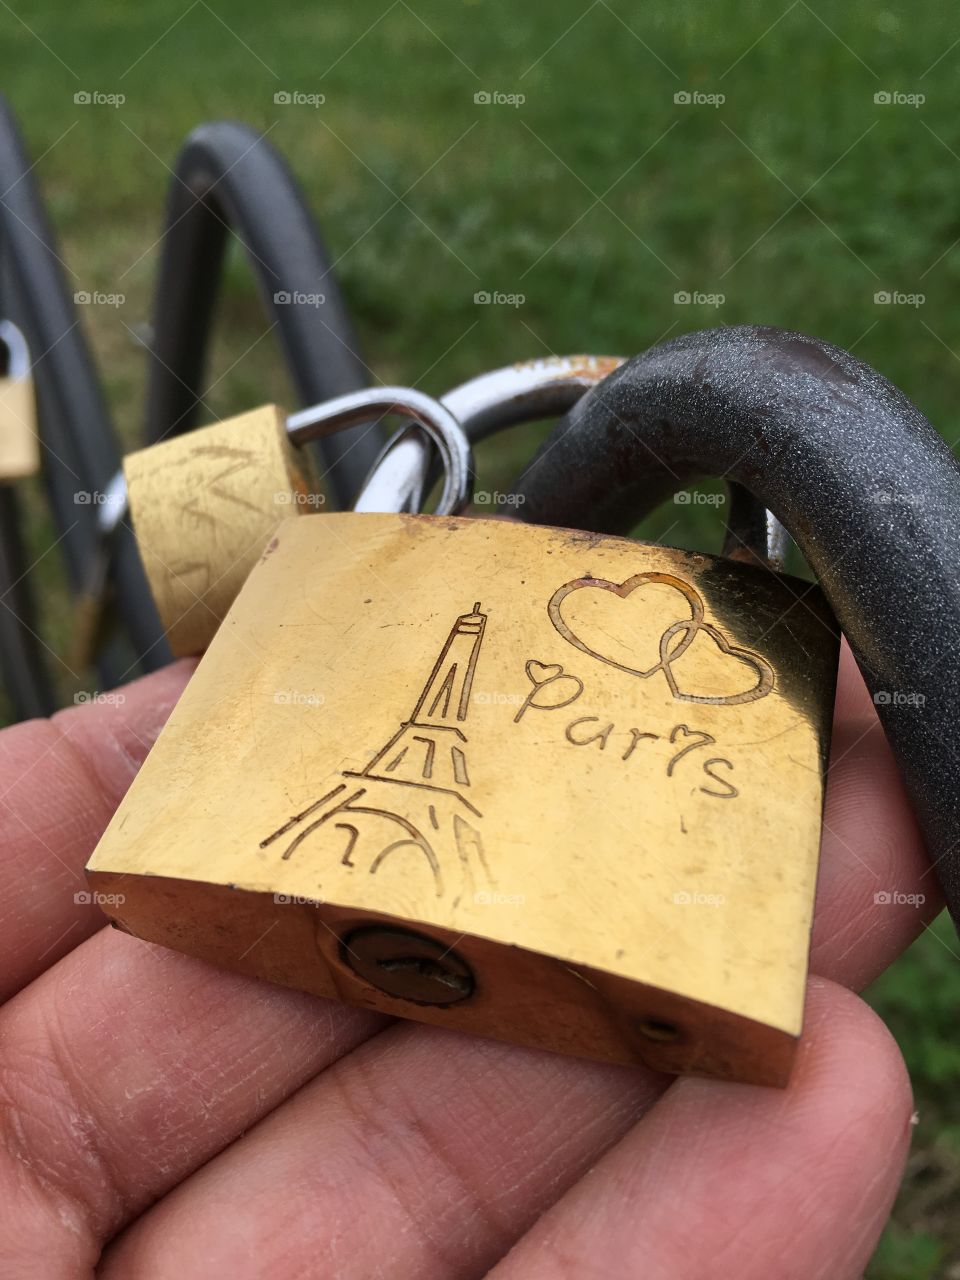 Paris my love carved on a padlock